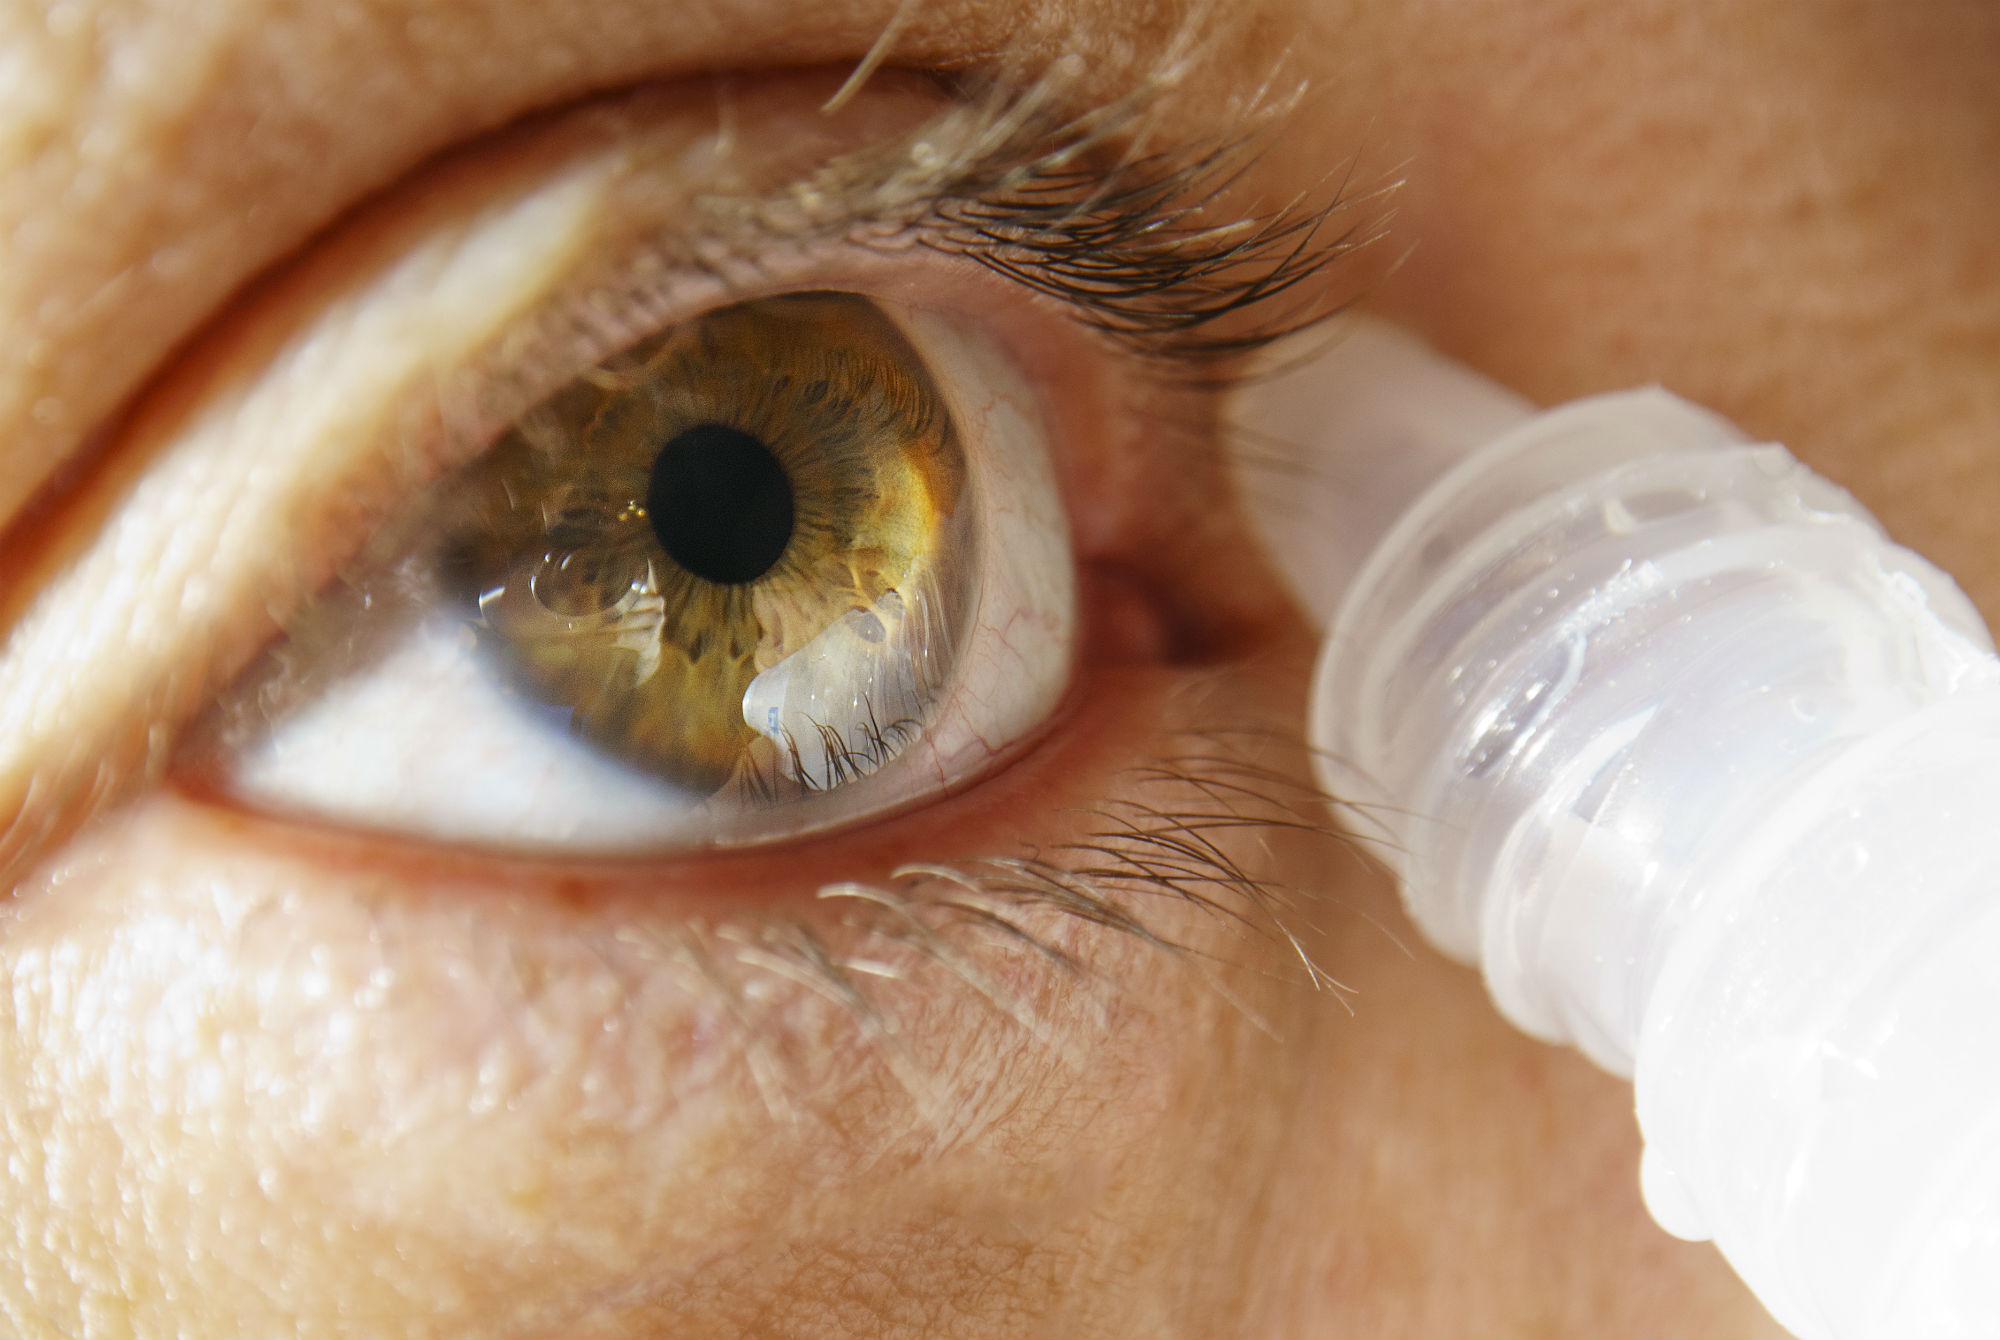 Woman had no idea she had 27 contact lenses stuck to her eye